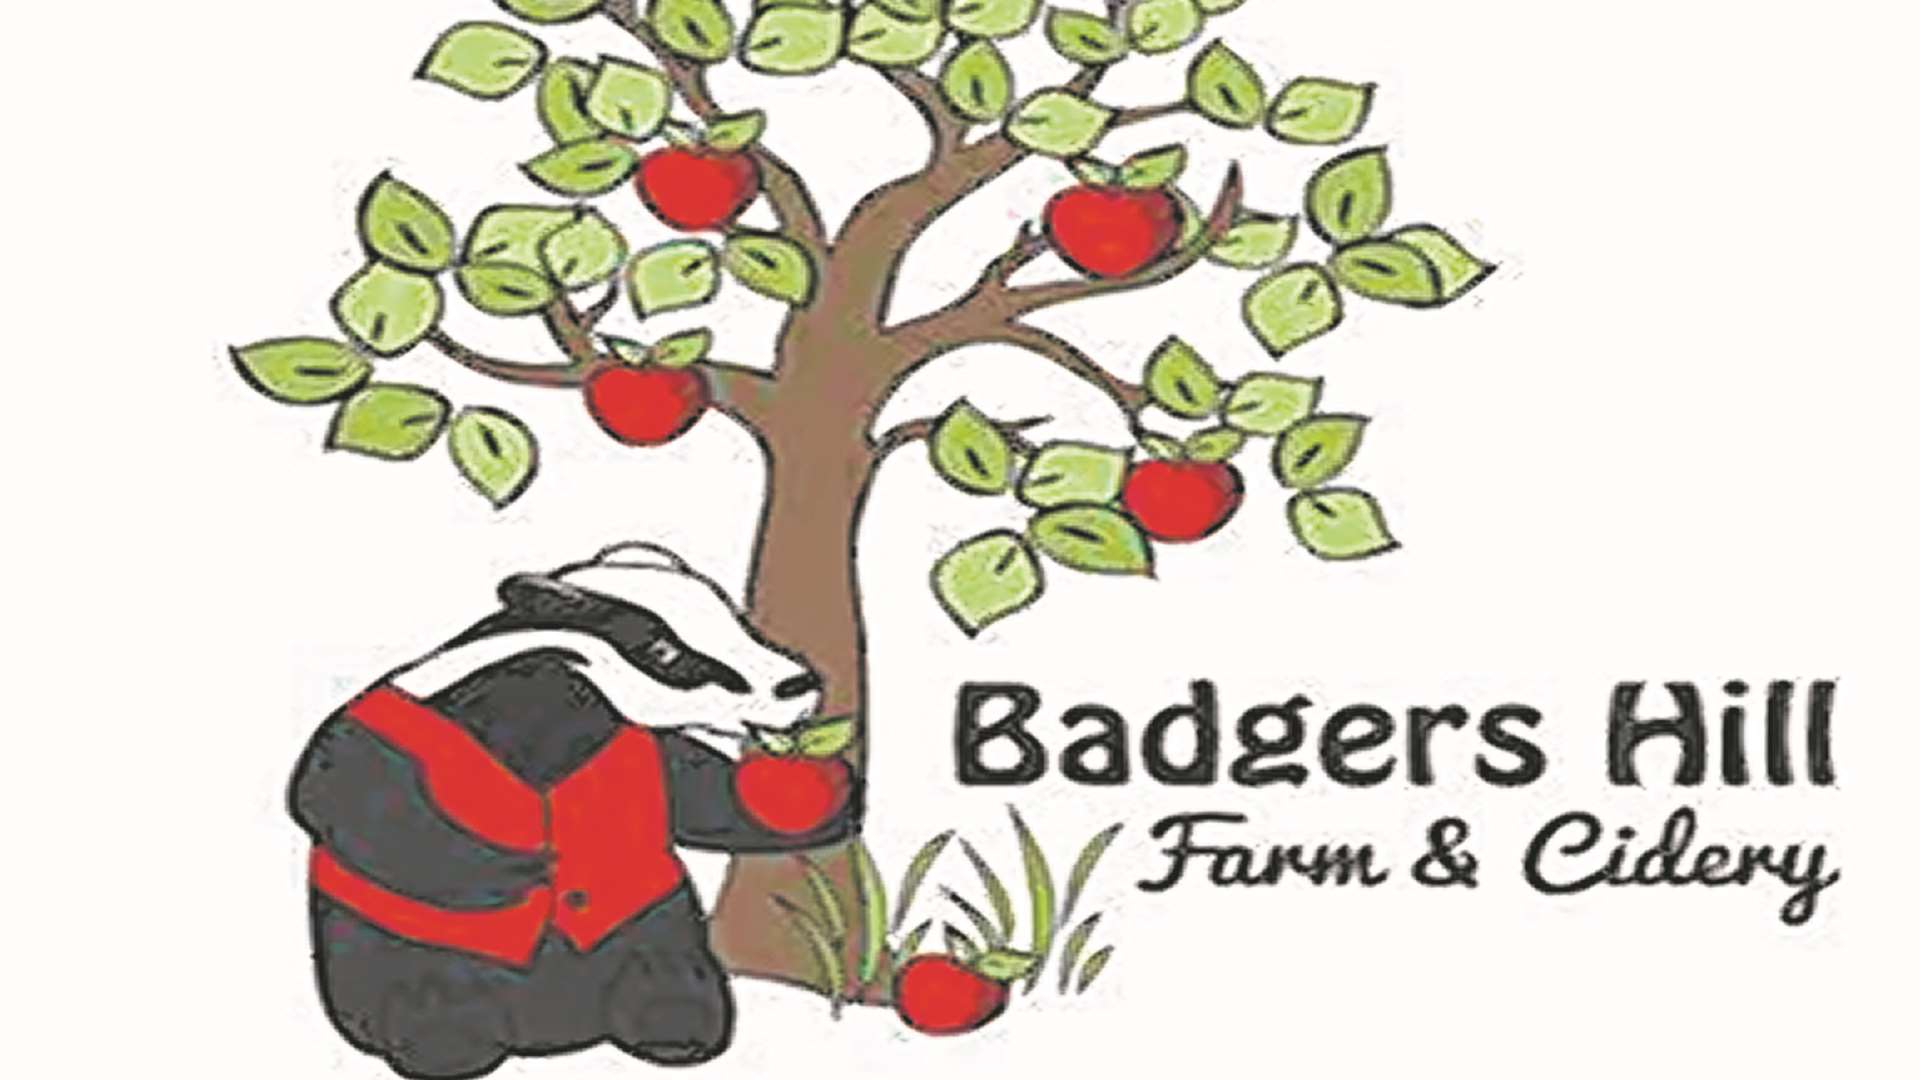 The Badger's Hill Farm logo